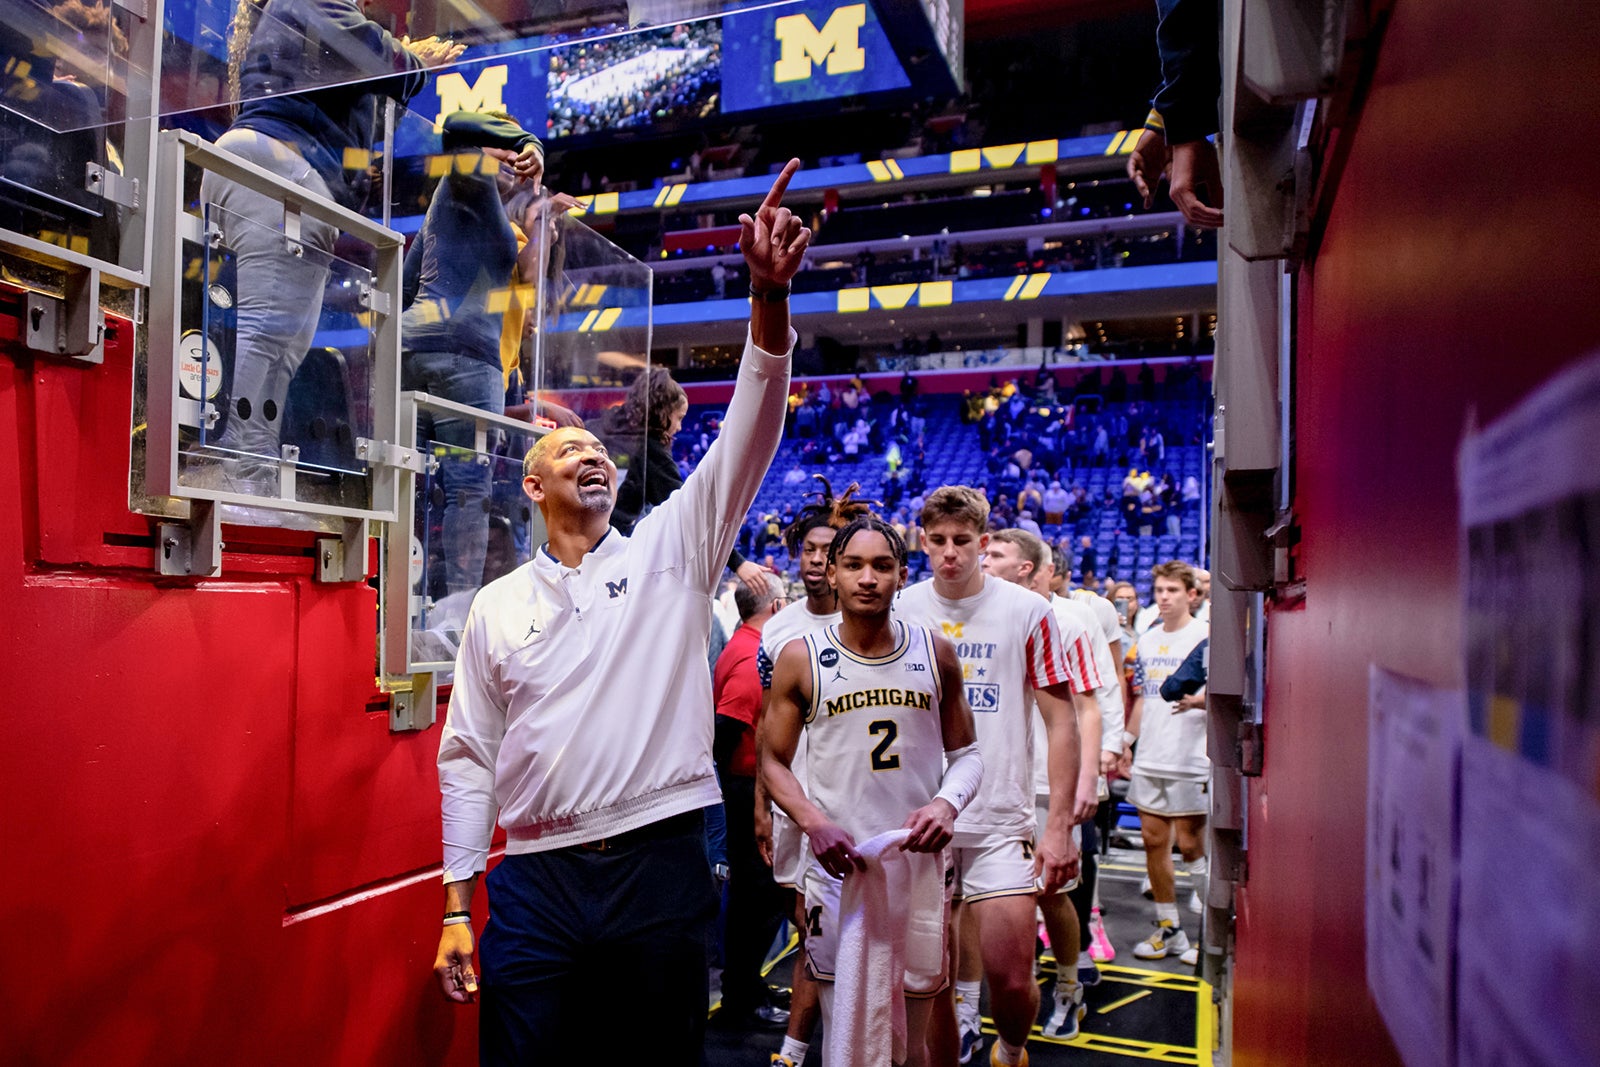 The University of Michigan Men’s Basketball team